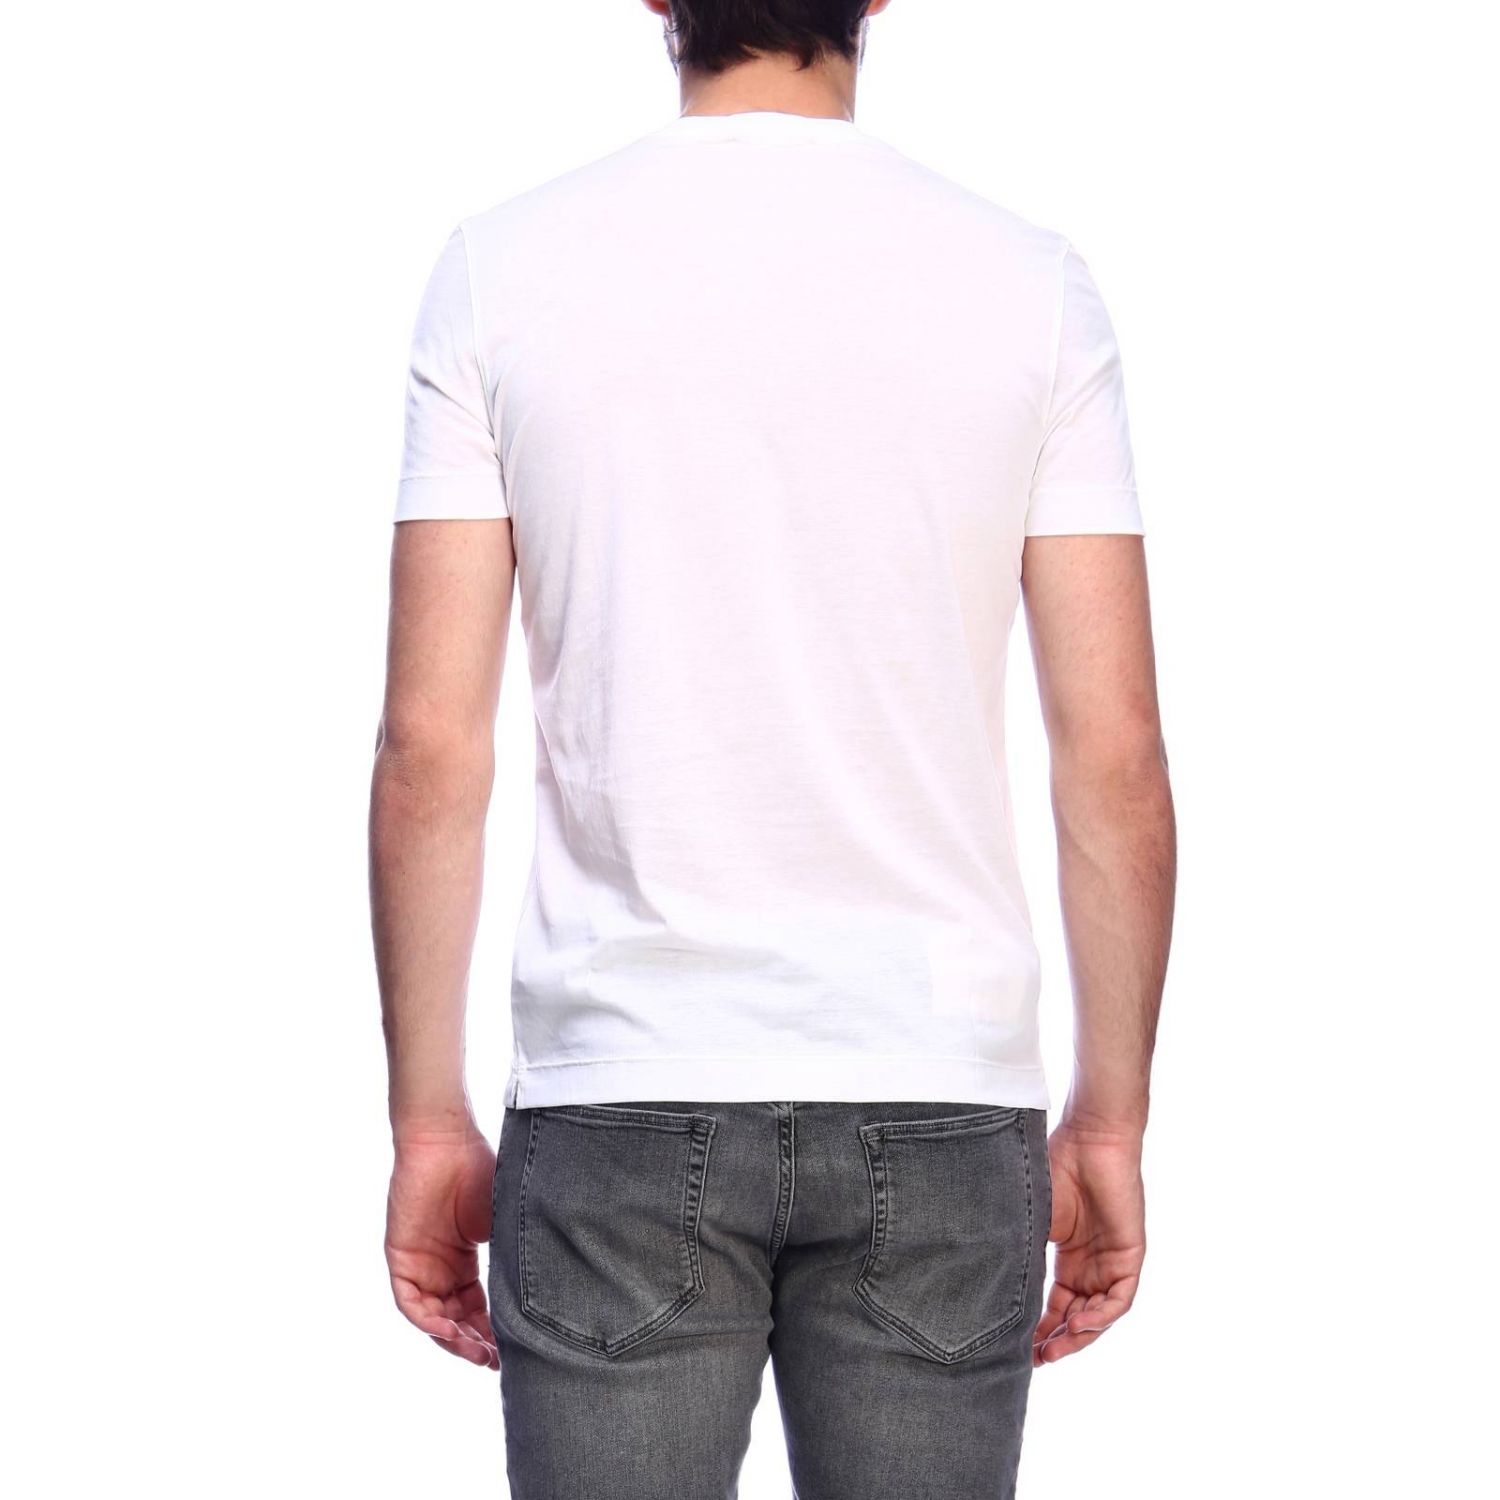 Della Ciana Outlet: T-shirt men - White | T-Shirt Della Ciana 0054/501B ...